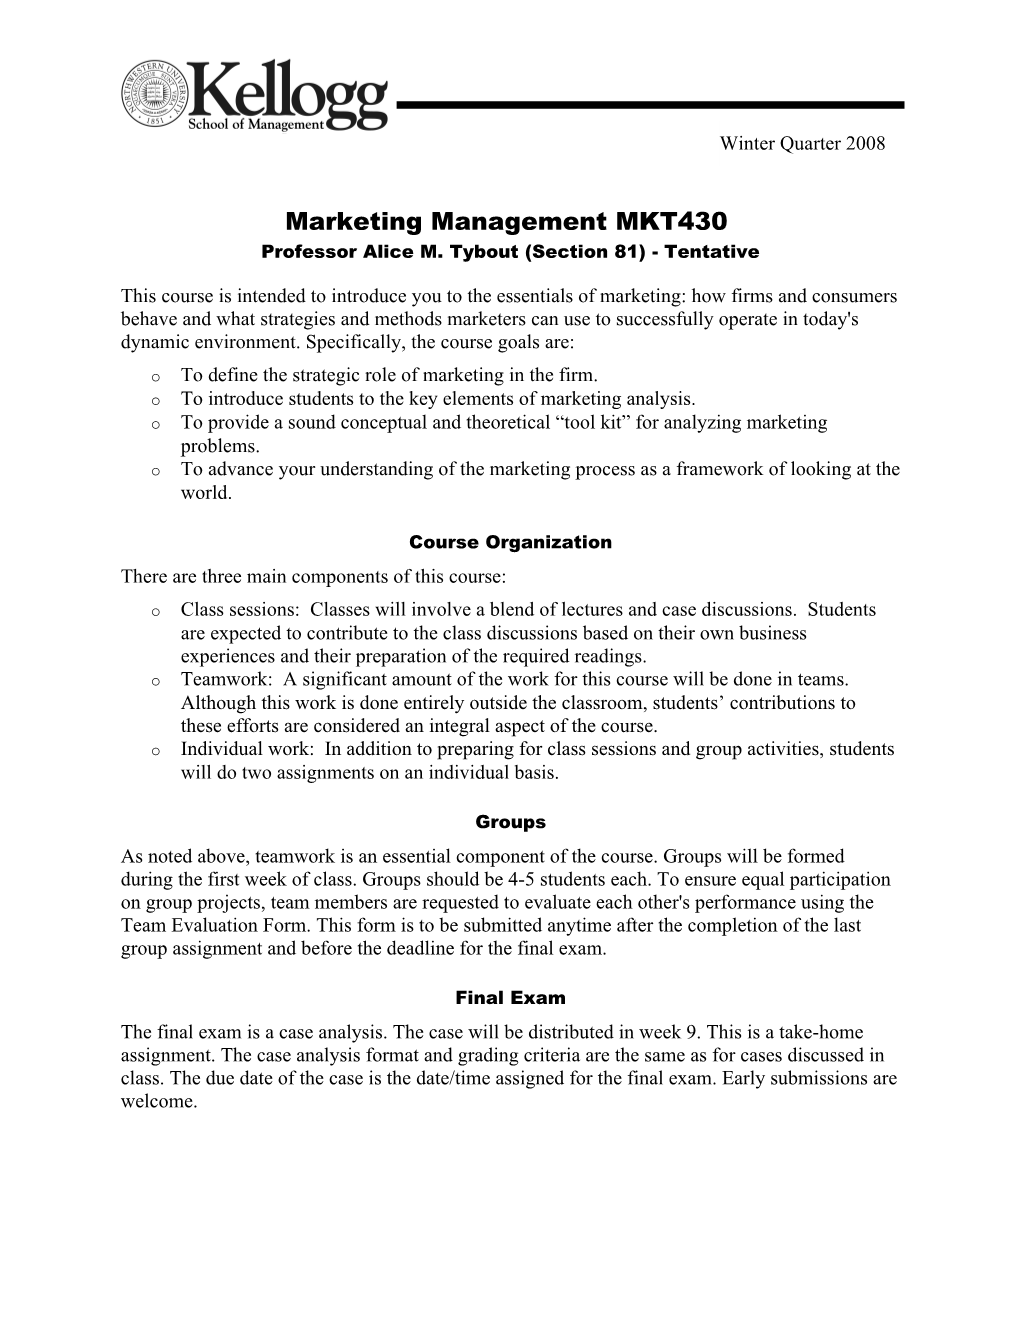 Marketing Management MKT430 Professor Alice M. Tybout (Section 81) - Tentative